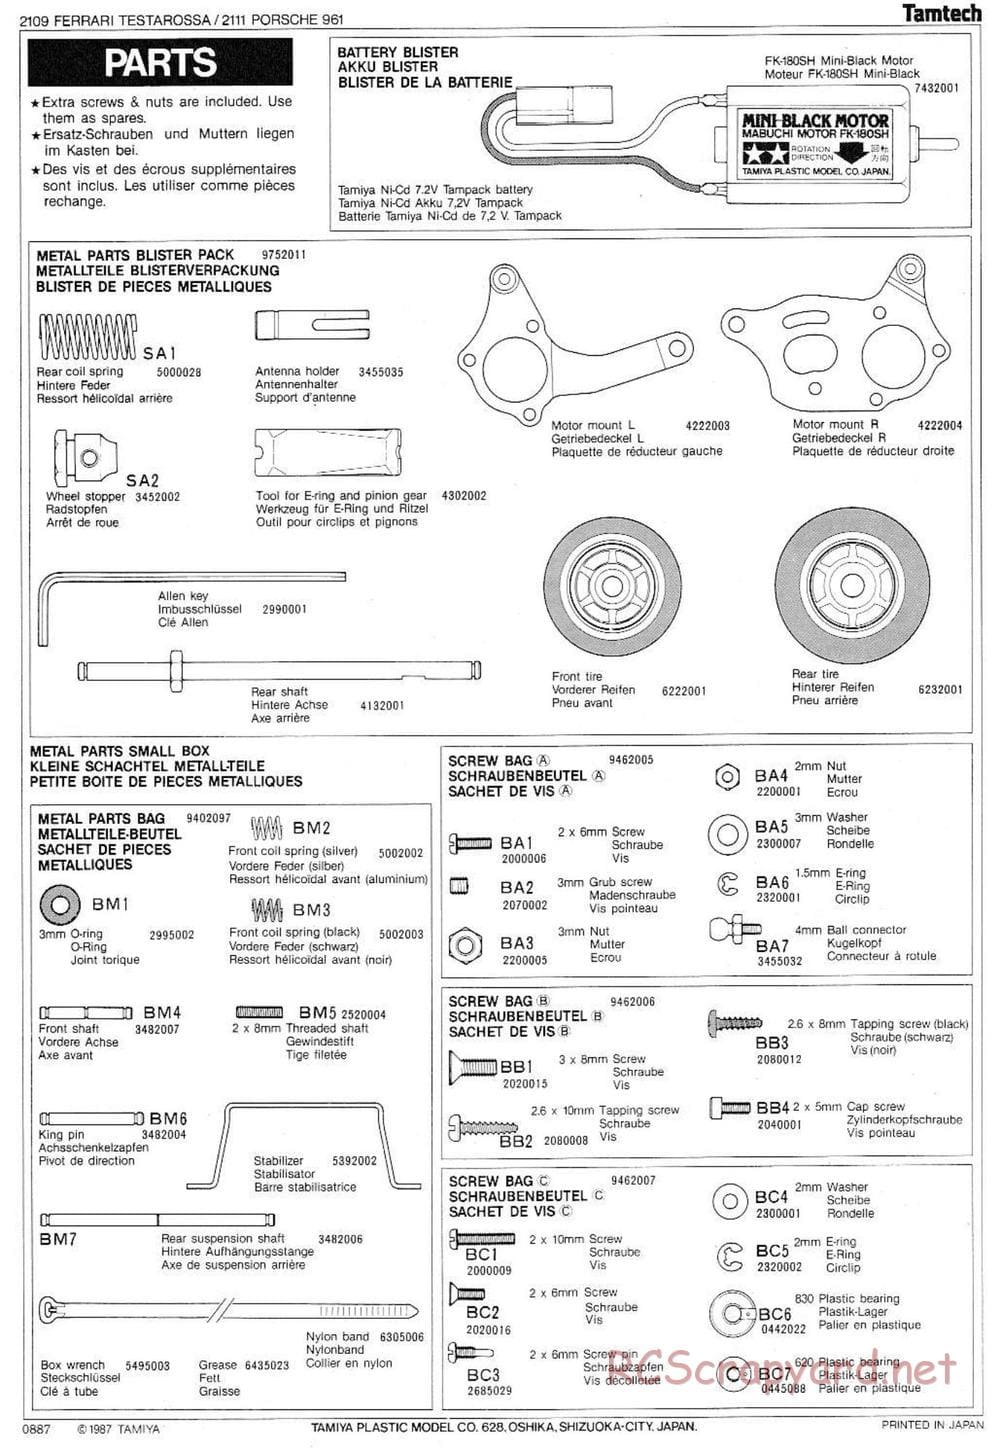 Tamiya - Tamtech - Porsche 961 Chassis - Manual - Page 17